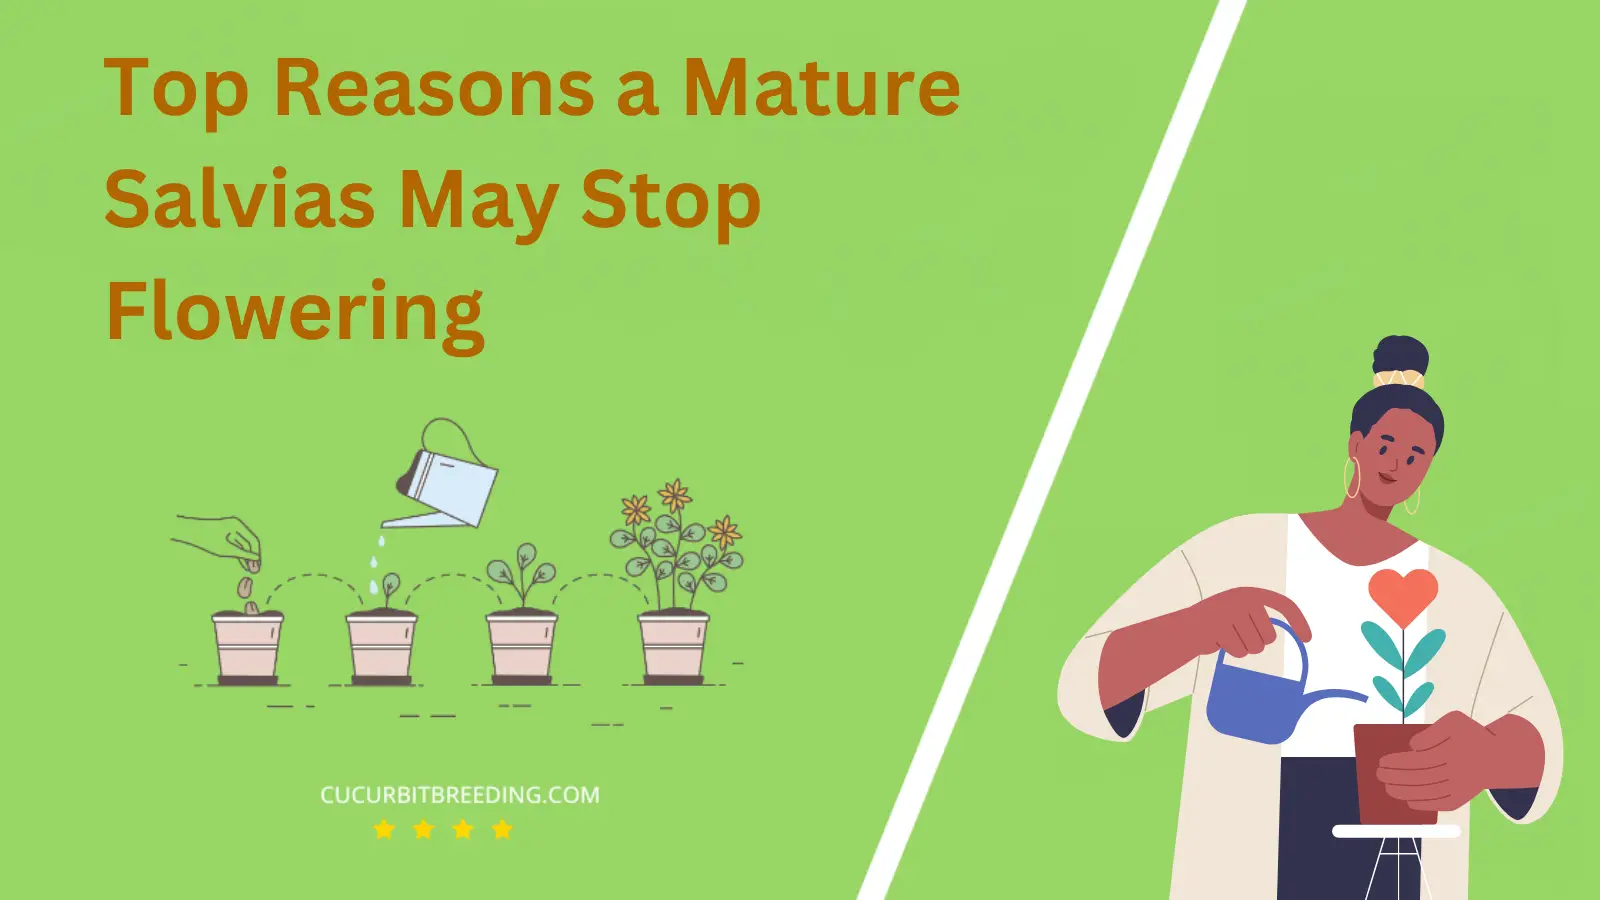 Top Reasons a Mature Salvias May Stop Flowering